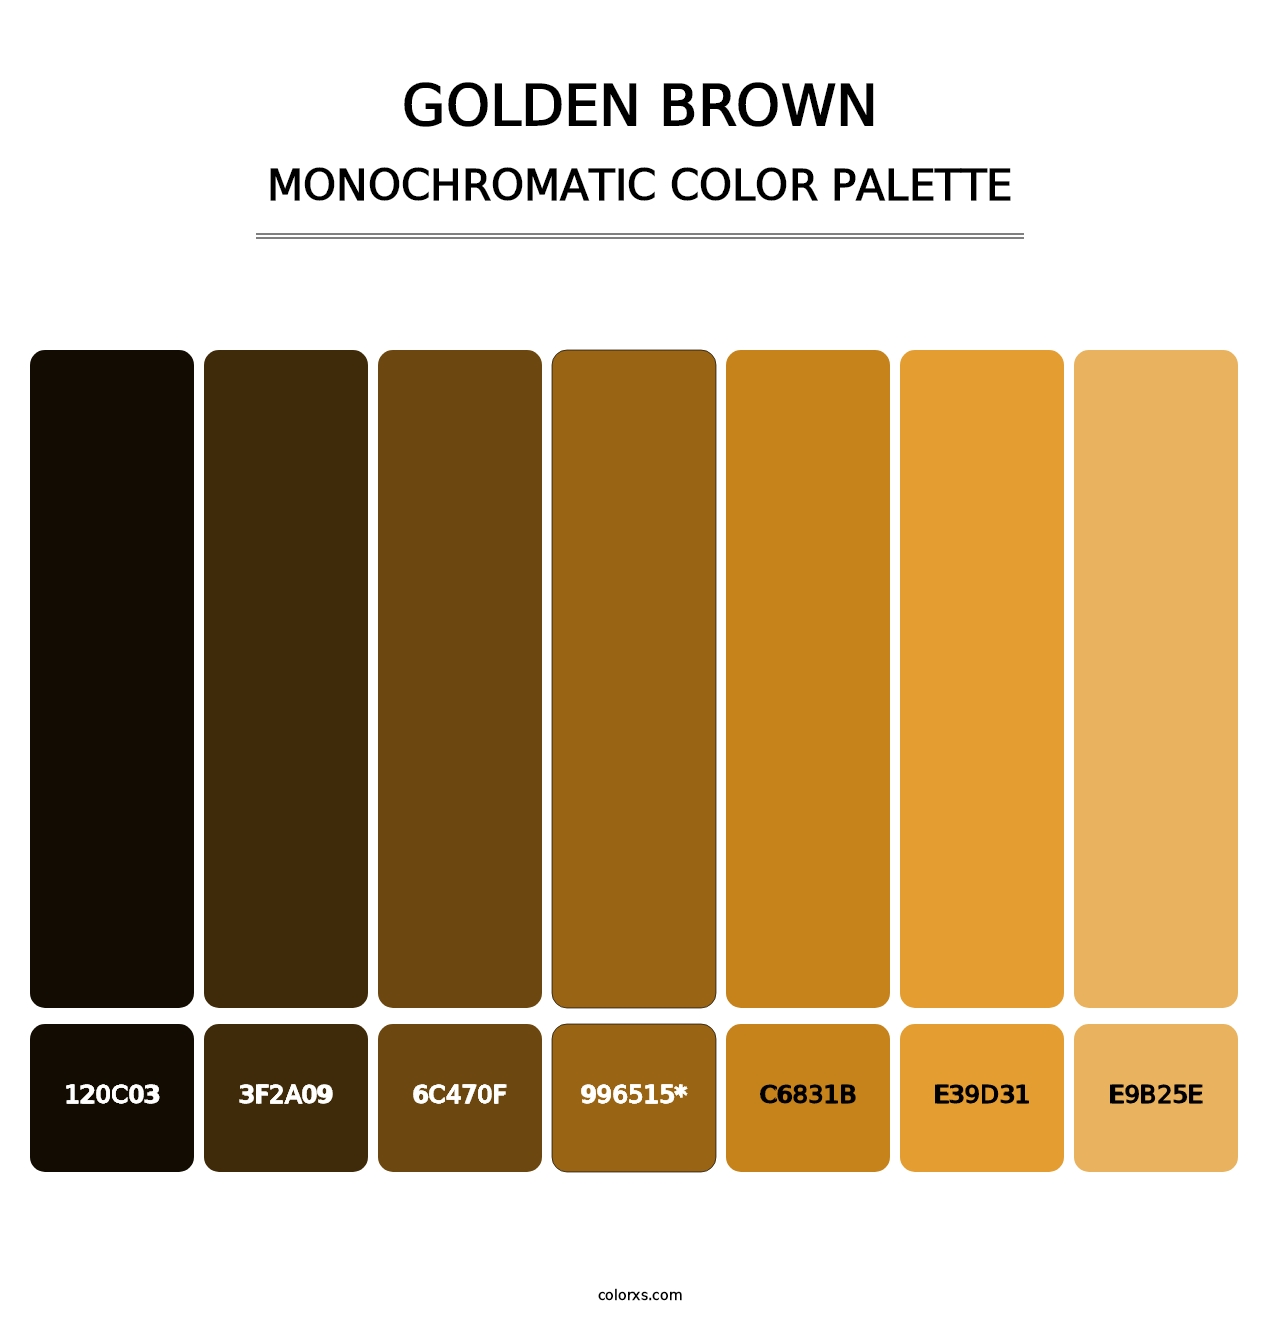 Golden brown - Monochromatic Color Palette